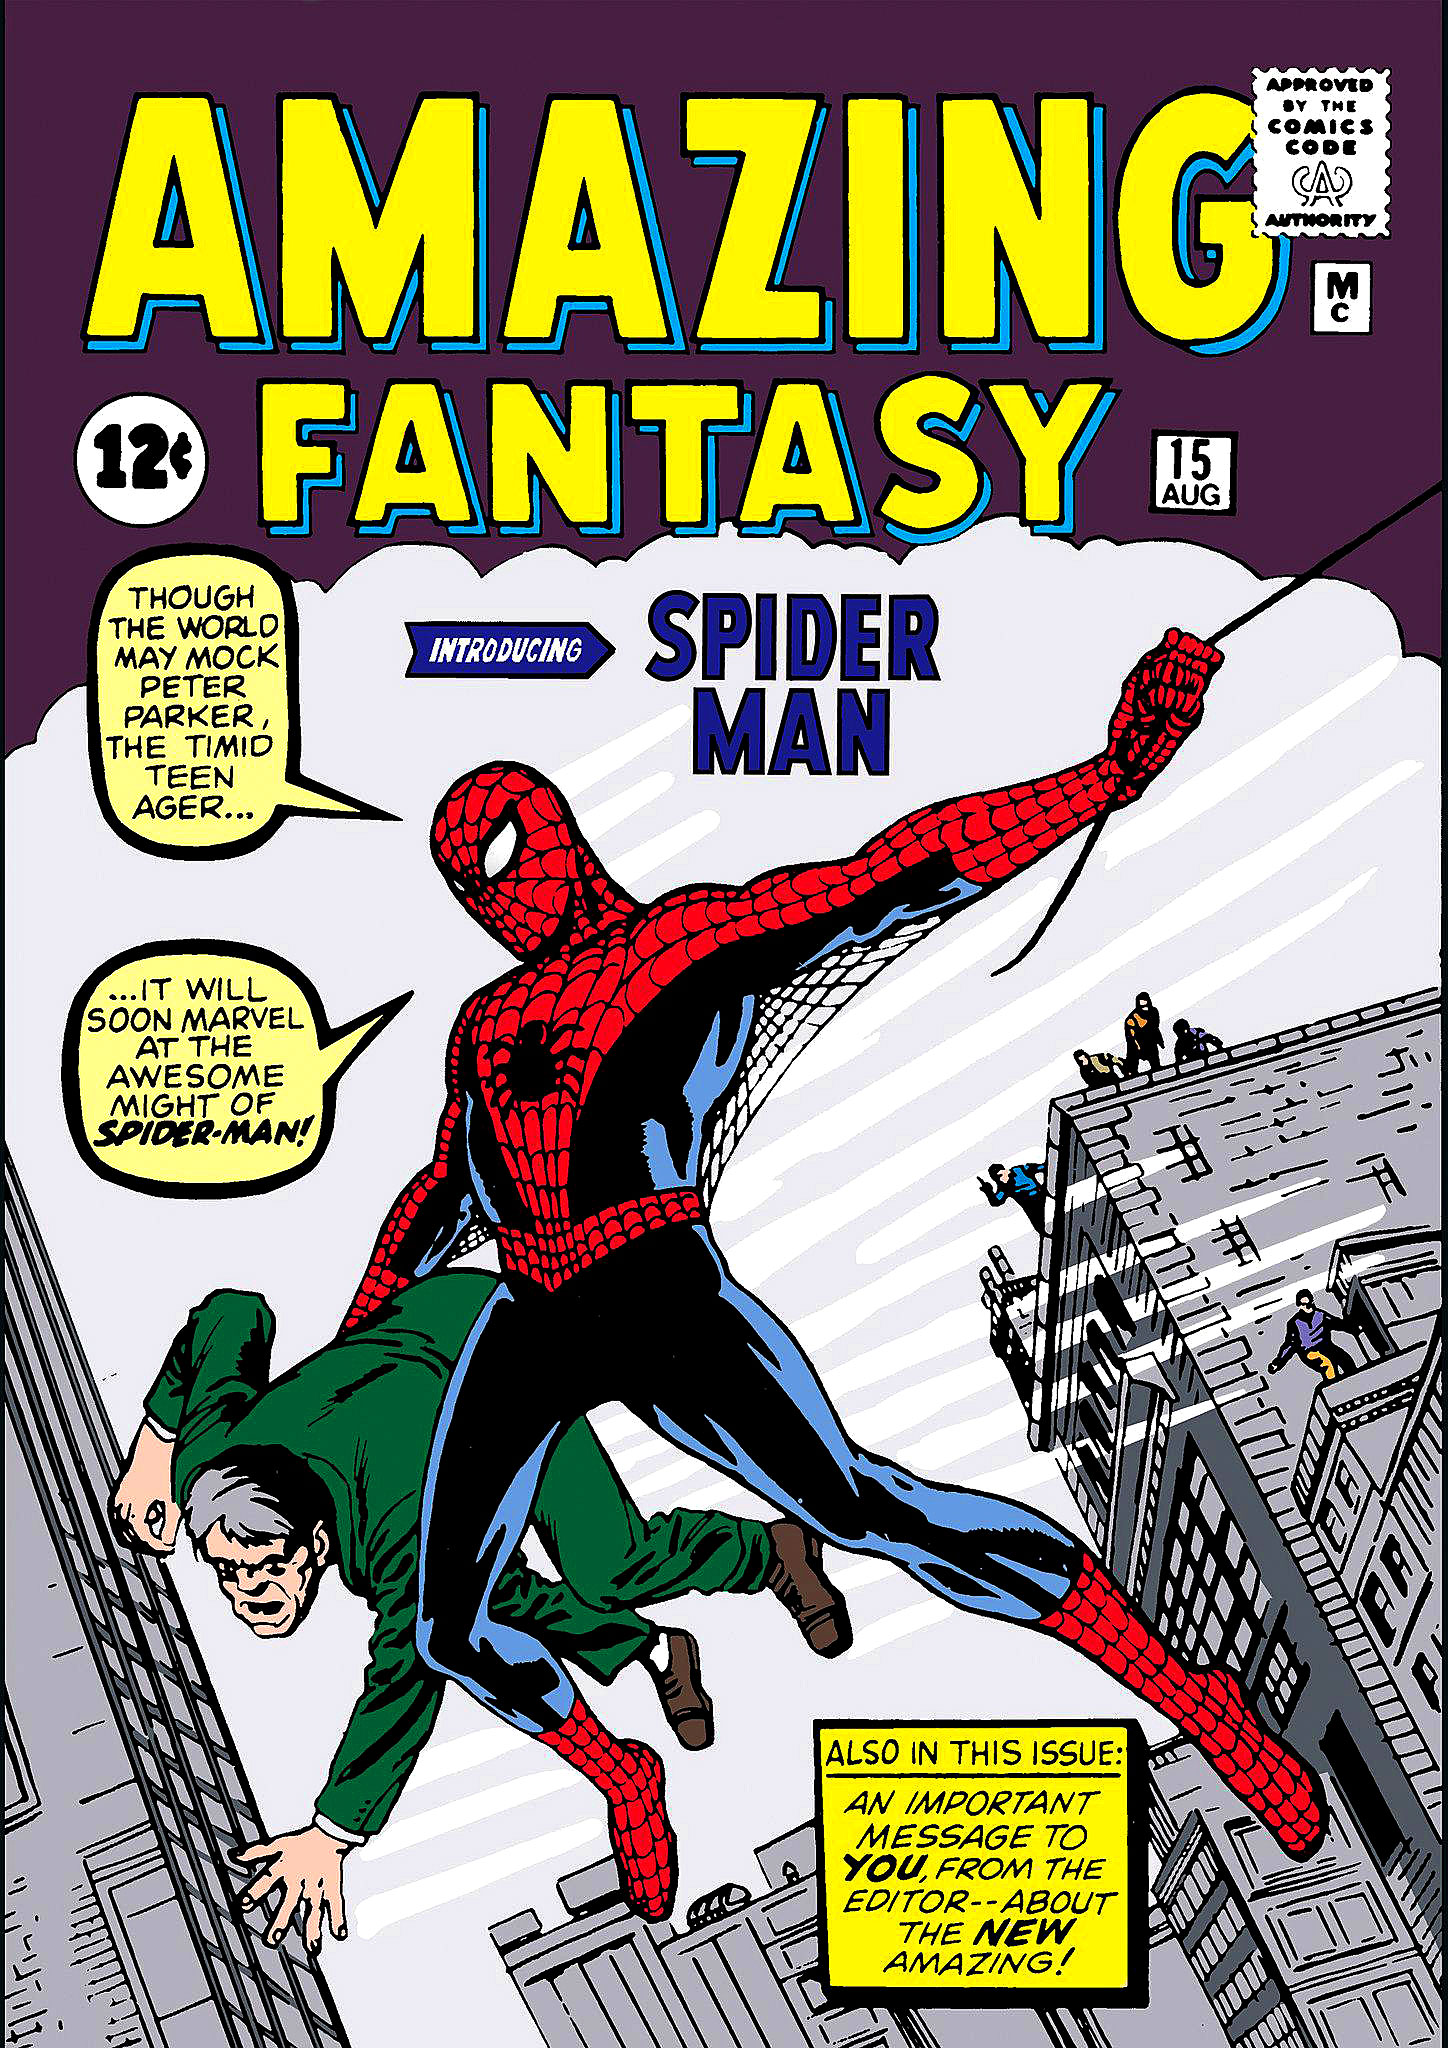 https://1.bp.blogspot.com/-0wXVCK2CYPo/W-p5fvLU_fI/AAAAAAAAtrA/0qHvHLraPQcXQ9cA_HNbM_ixofqXnvcsgCLcBGAs/s3200/Spiderman-Comic-Debut-Stan-Lee-1962.jpg